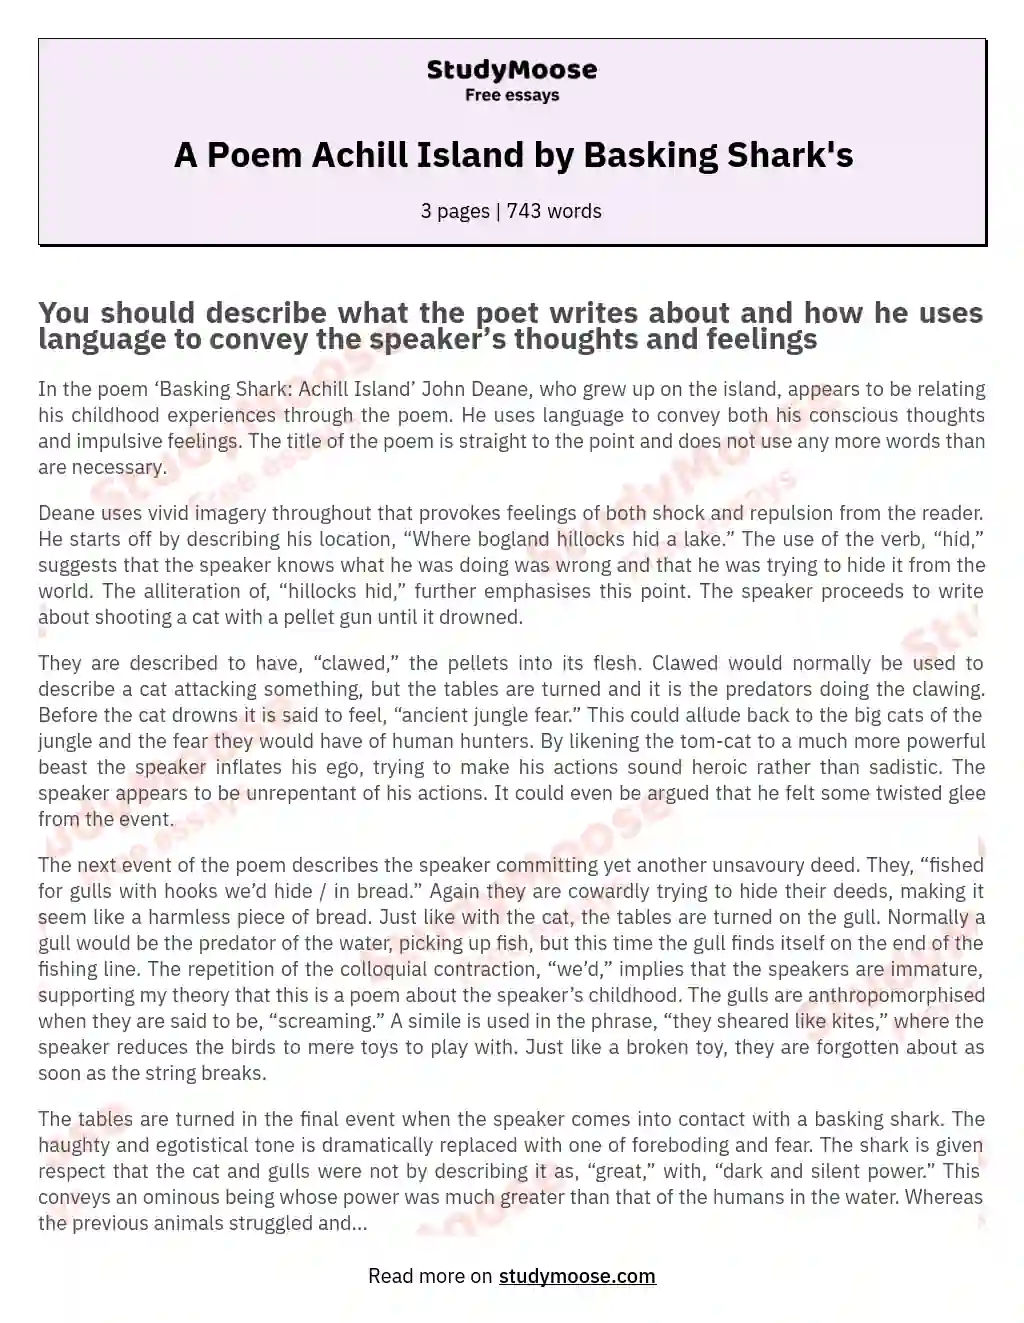 A Poem Achill Island by Basking Shark's essay